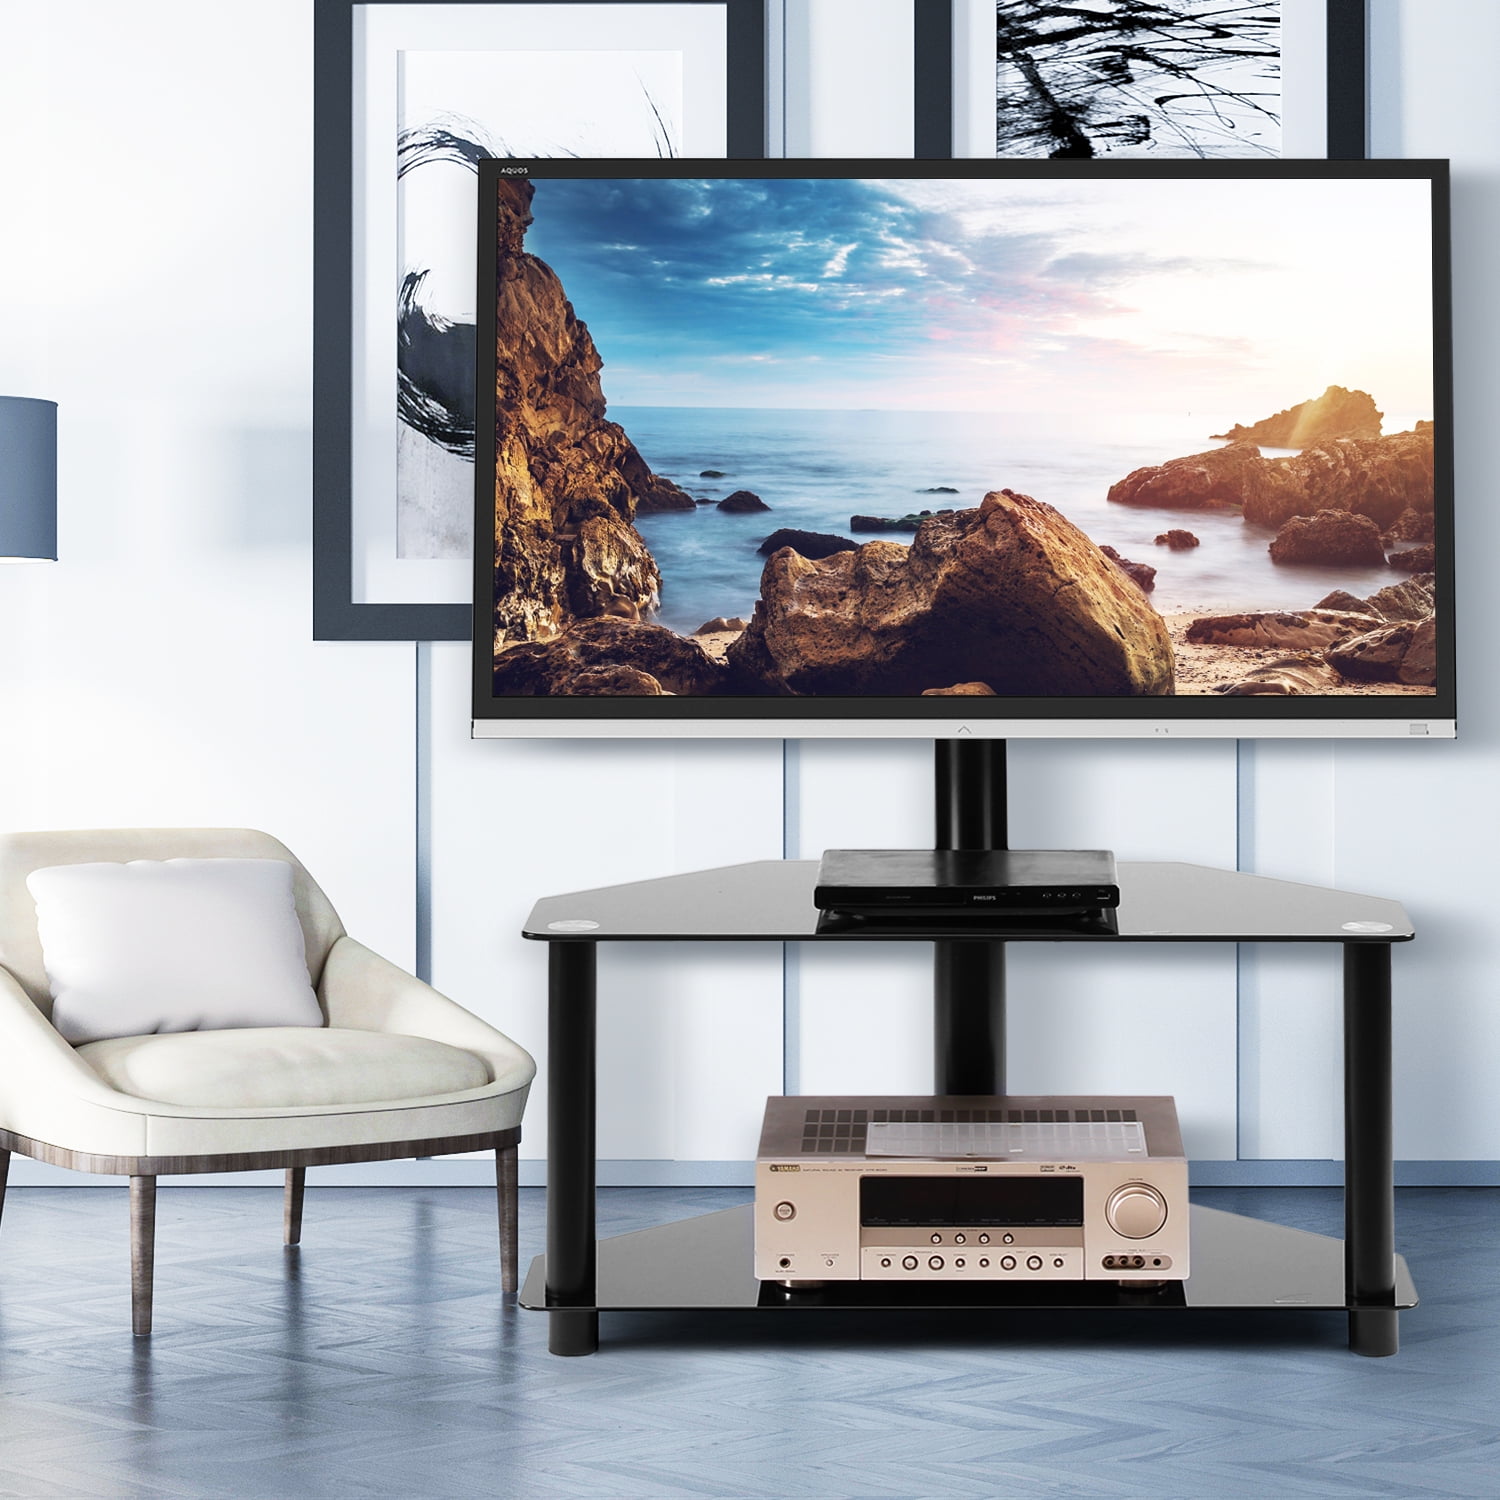 5Rcom 2-Shelf Corner Floor TV Stand with Swivel Mount for ...